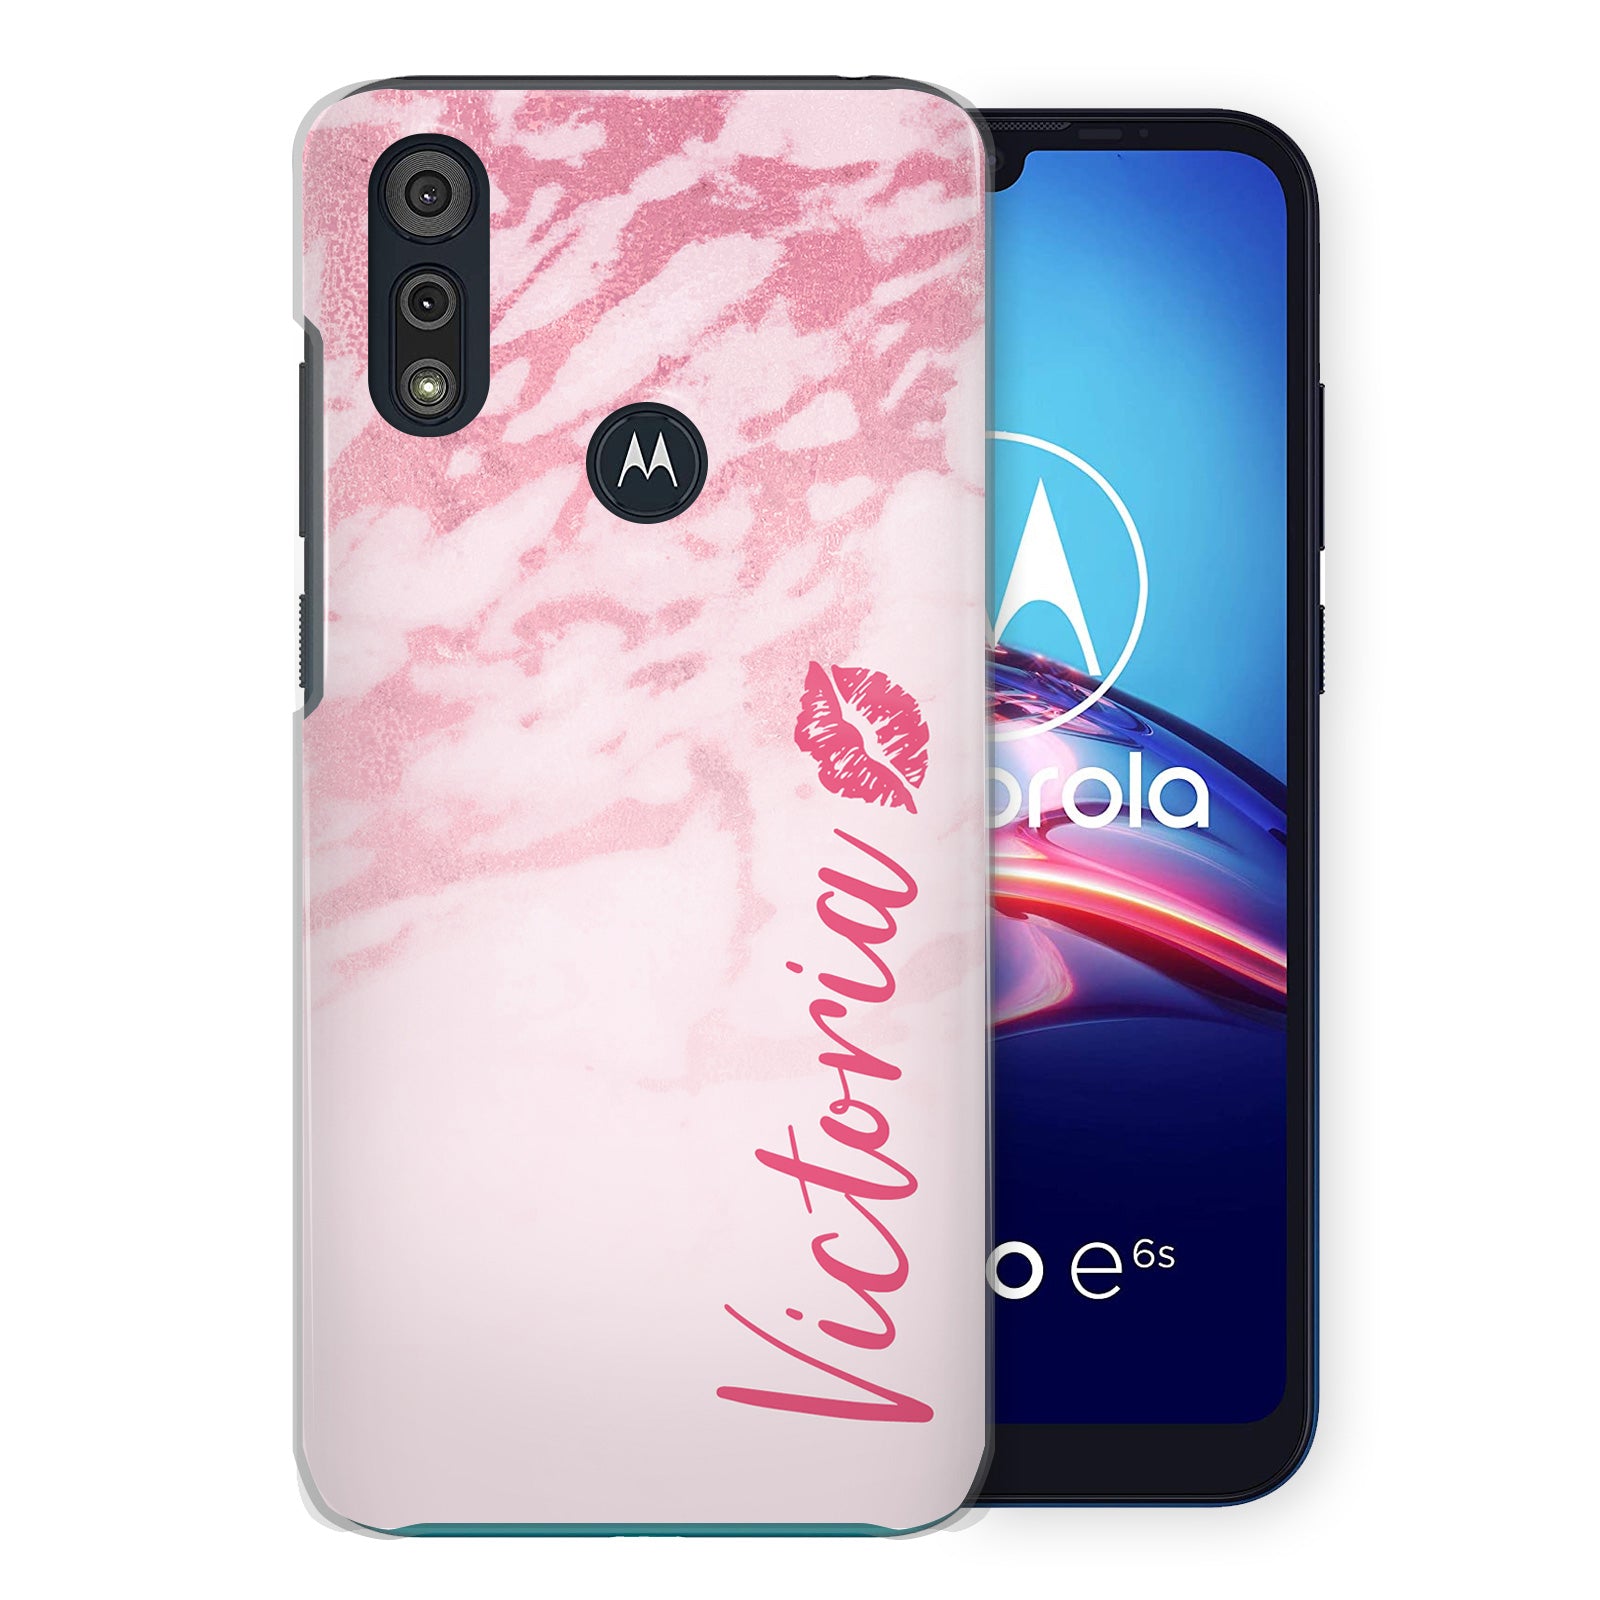 Personalised Motorola Hard Case - Pink Marble & Name Side Kiss